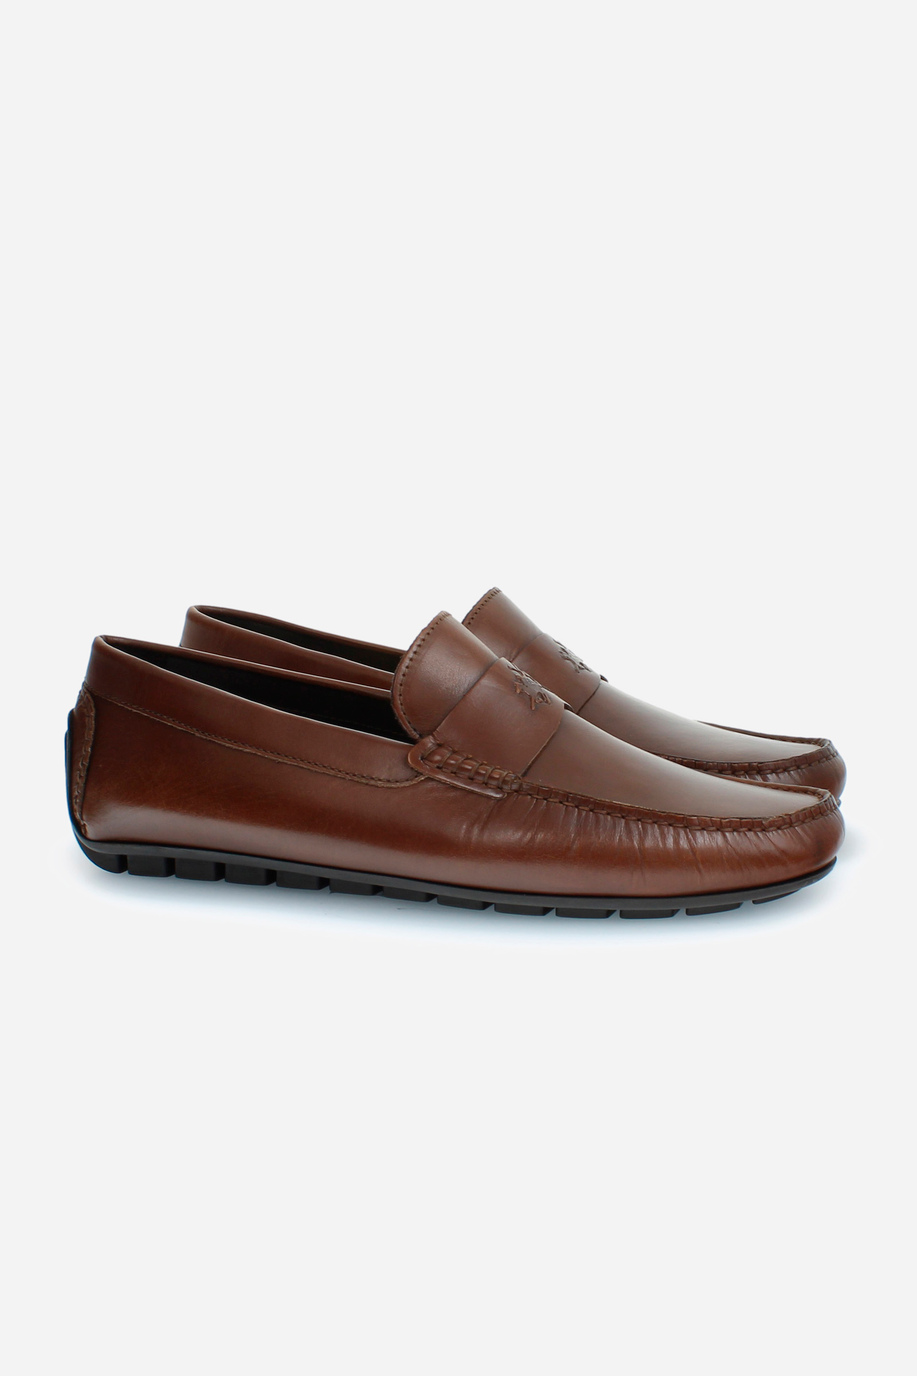 Men's leather loafers - Formal Shoes | La Martina - Official Online Shop